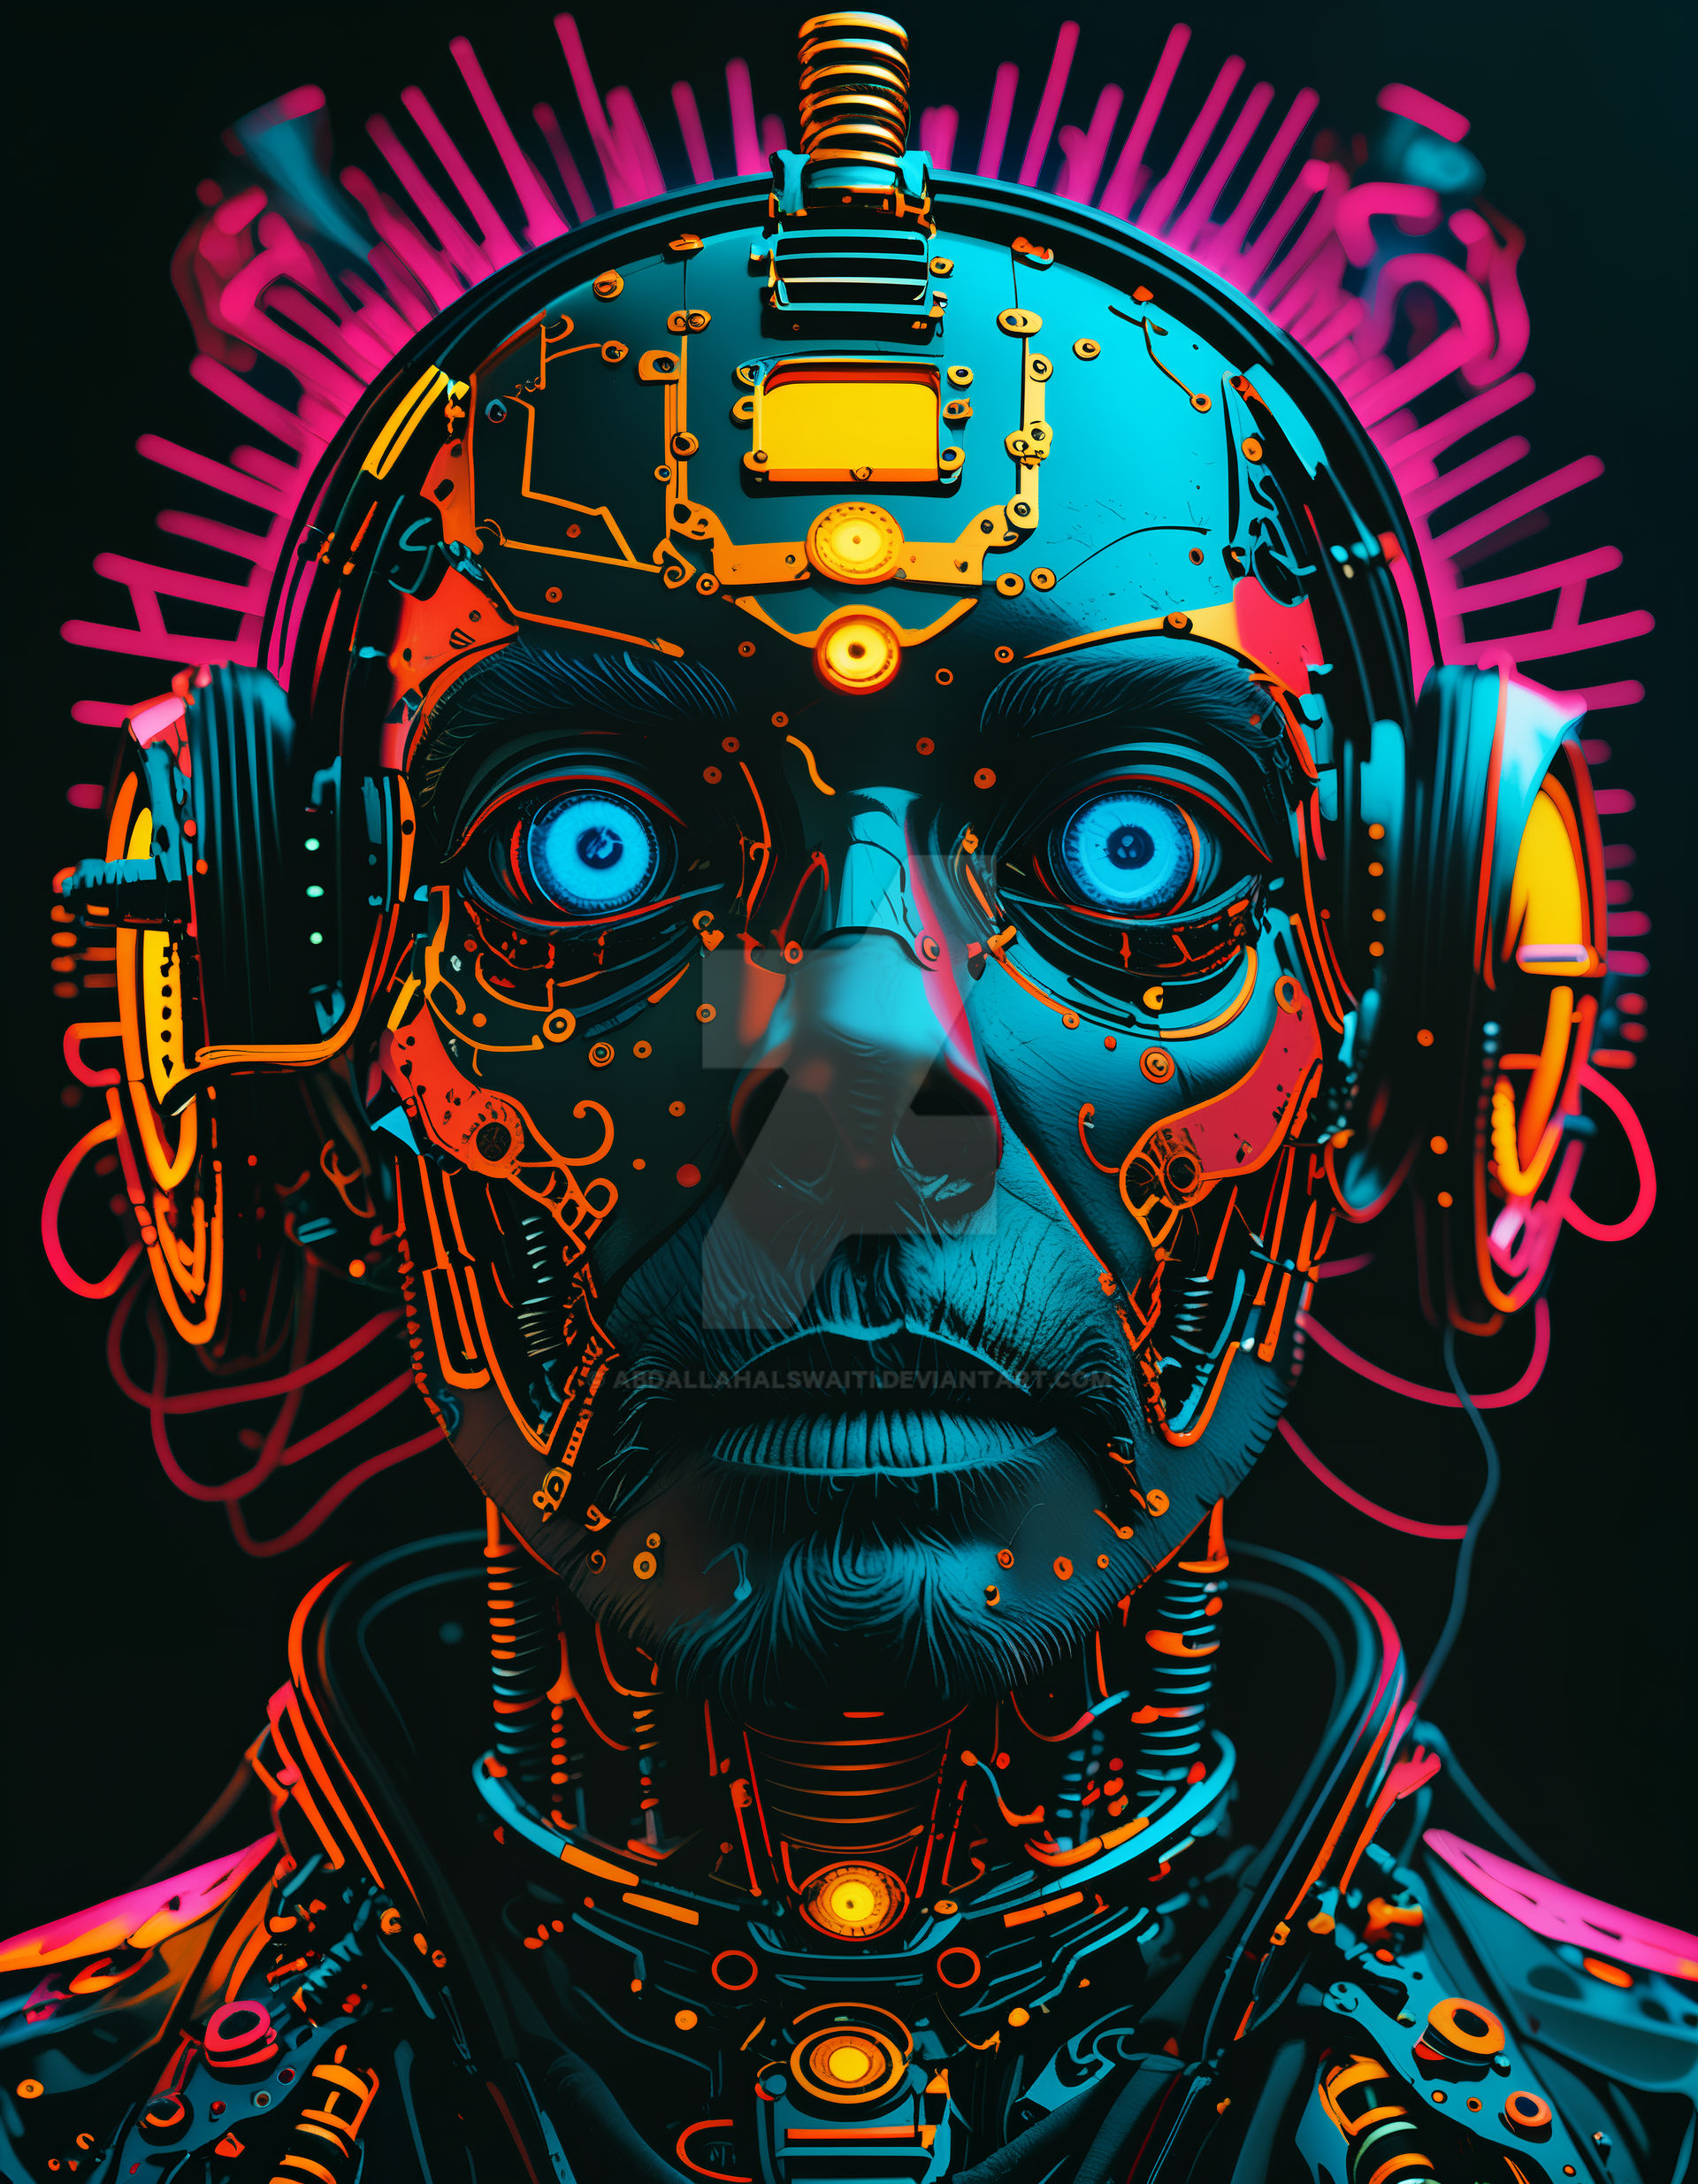 Neon Cyborg Vision by abdallahalswaiti on DeviantArt